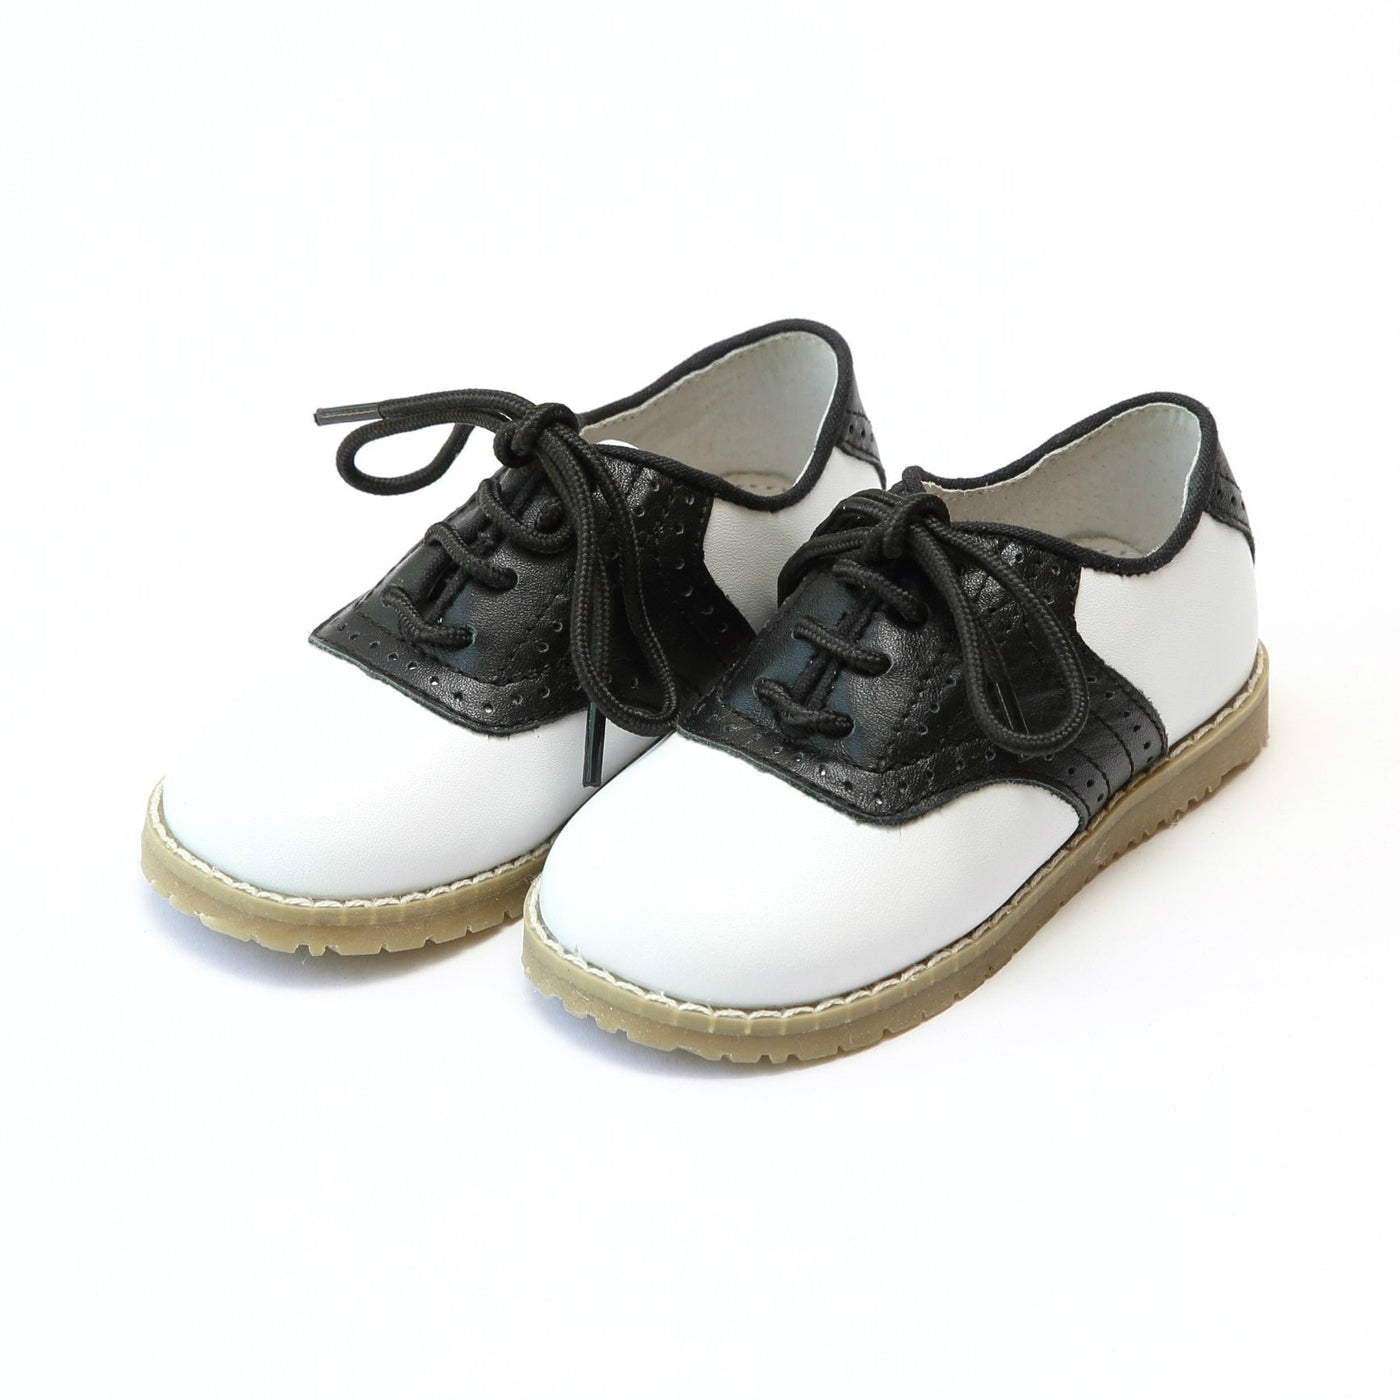 L'amour Luke Two Tone Leather Saddle Shoe - White with Black - Breckenridge Baby